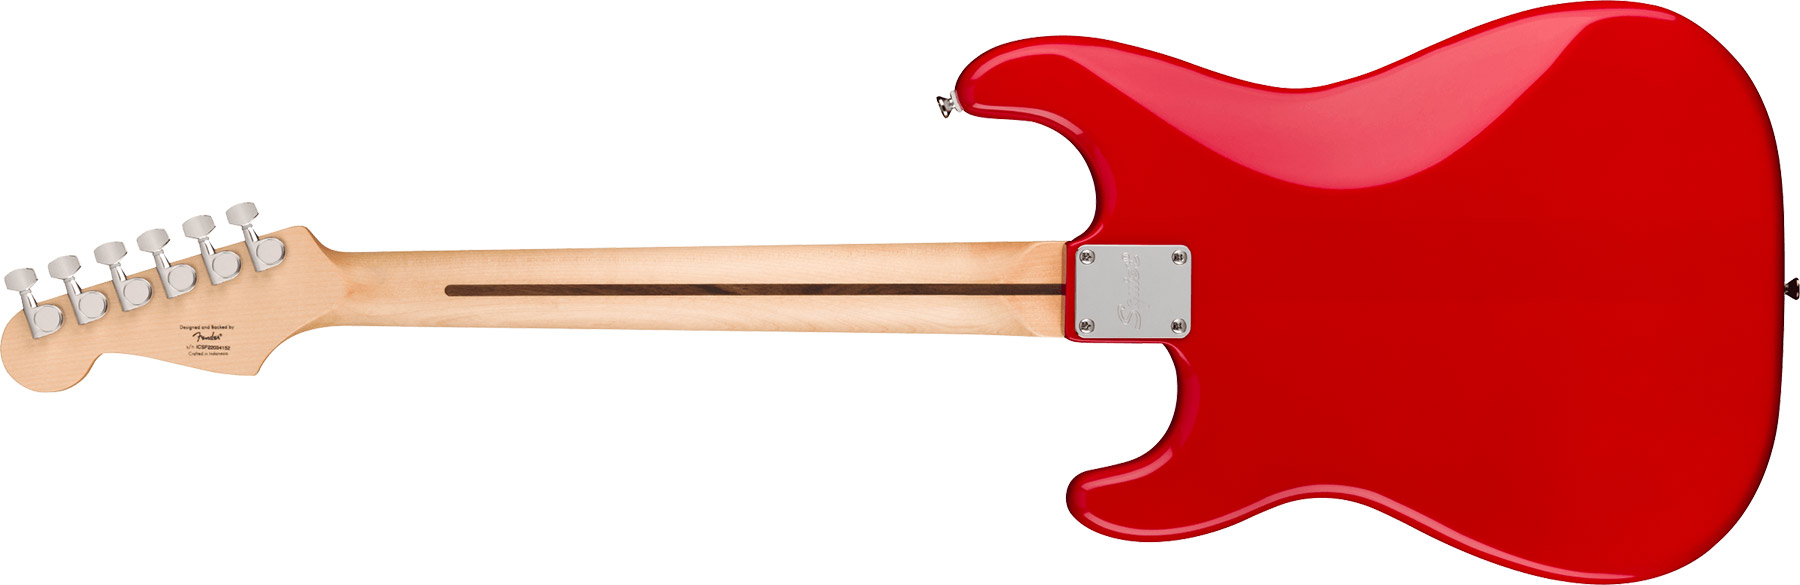 Squier Strat Sonic Hardtail 3s Ht Lau - Torino Red - Str shape electric guitar - Variation 1